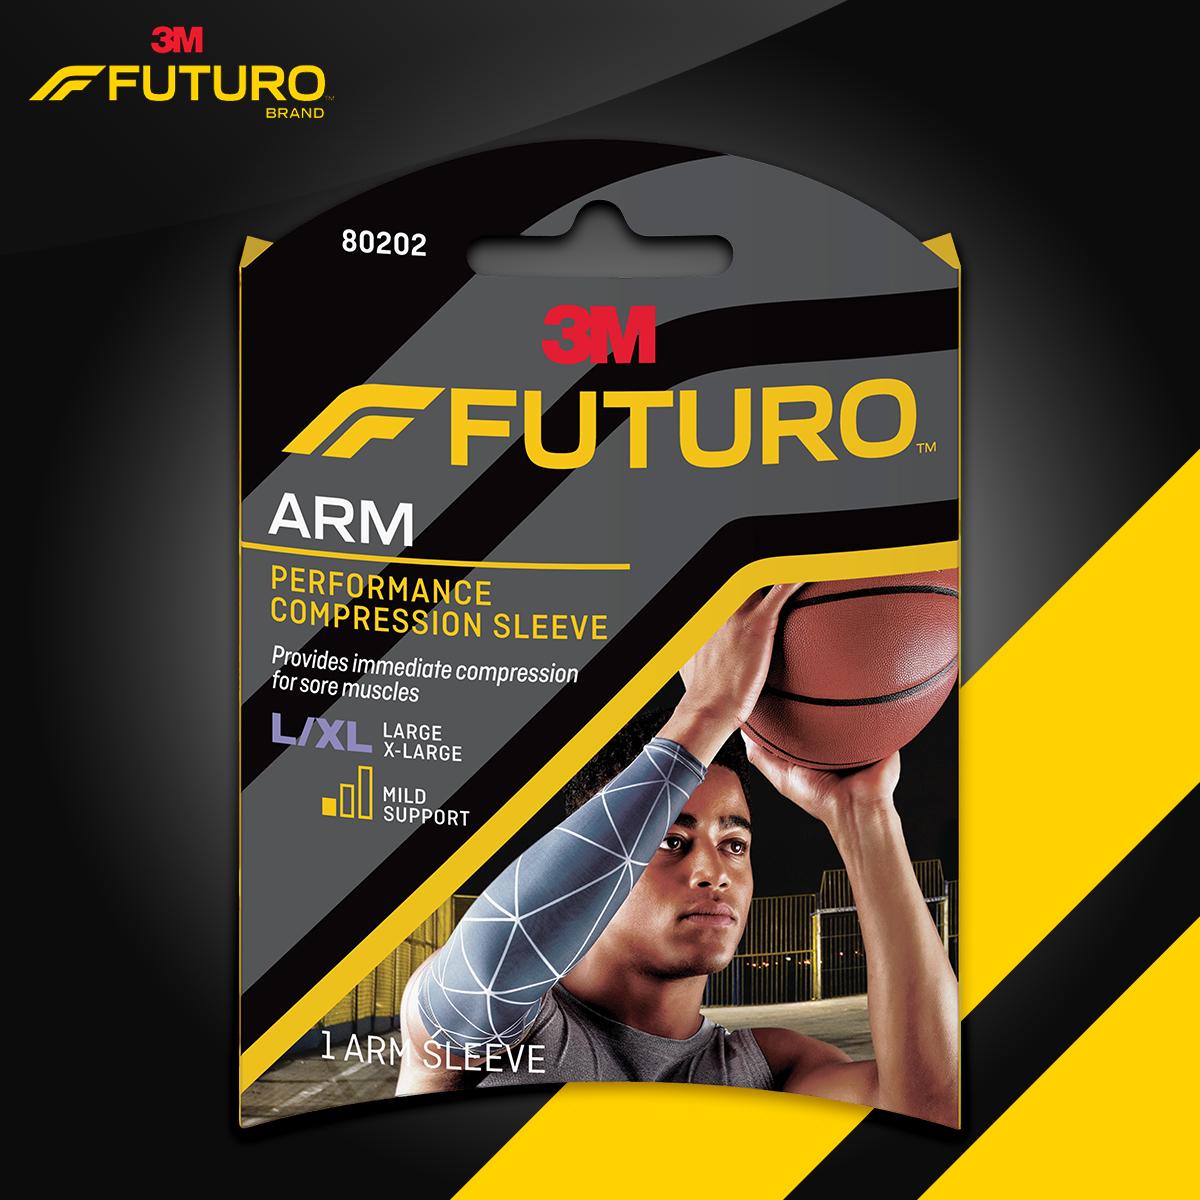 Futuro™ Performance Compression Arm Sleeve L/XL,ฟูทูโร่™ อุปกรณ์รัดกล้ามเนื้อแขน (ขนาดใหญ่-ใหญ่พิเศษ)